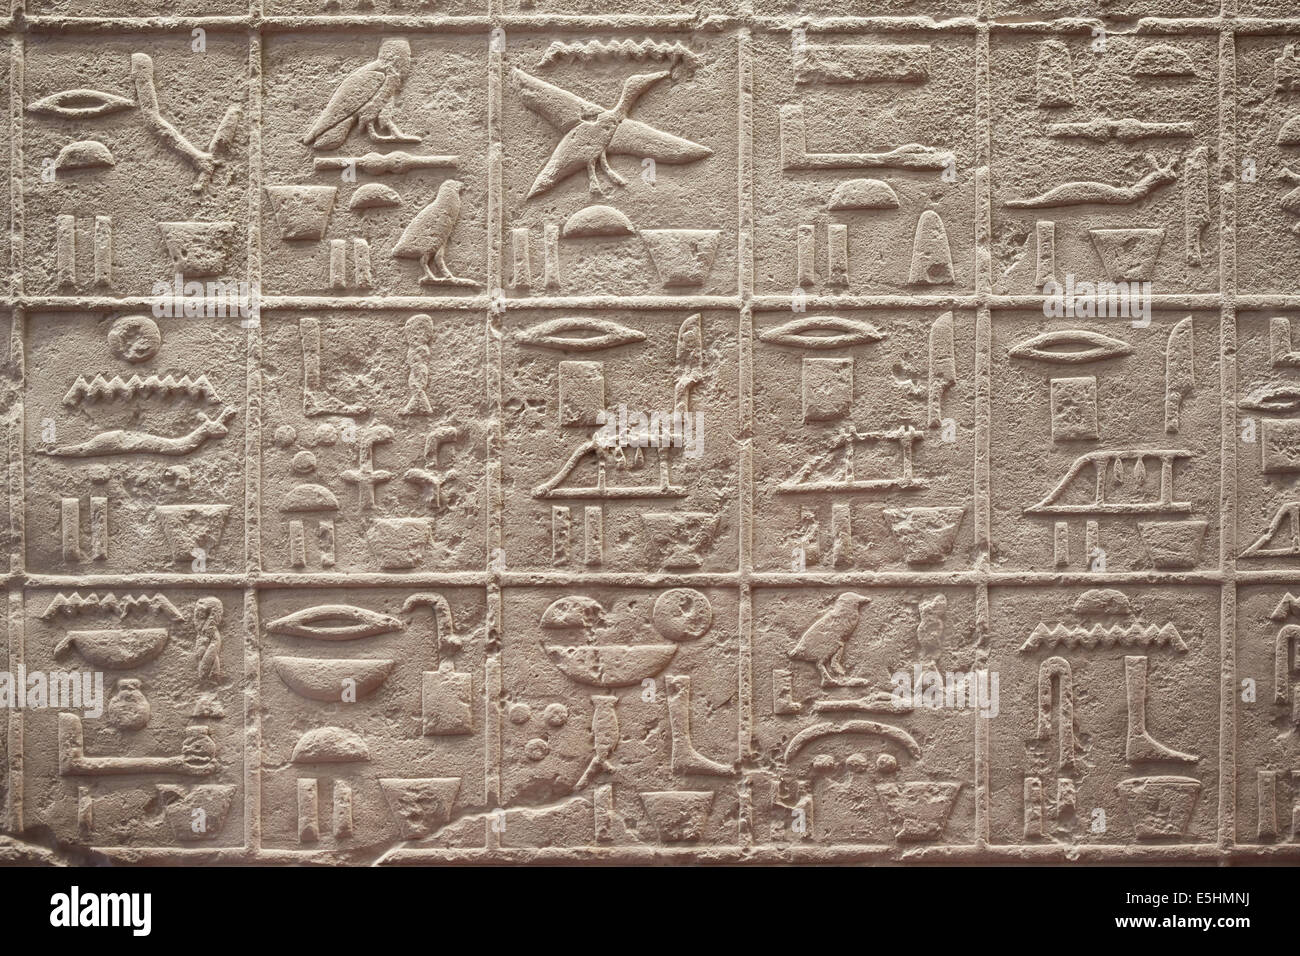 Egyptian hieroglyphics writing on stone background Stock Photo